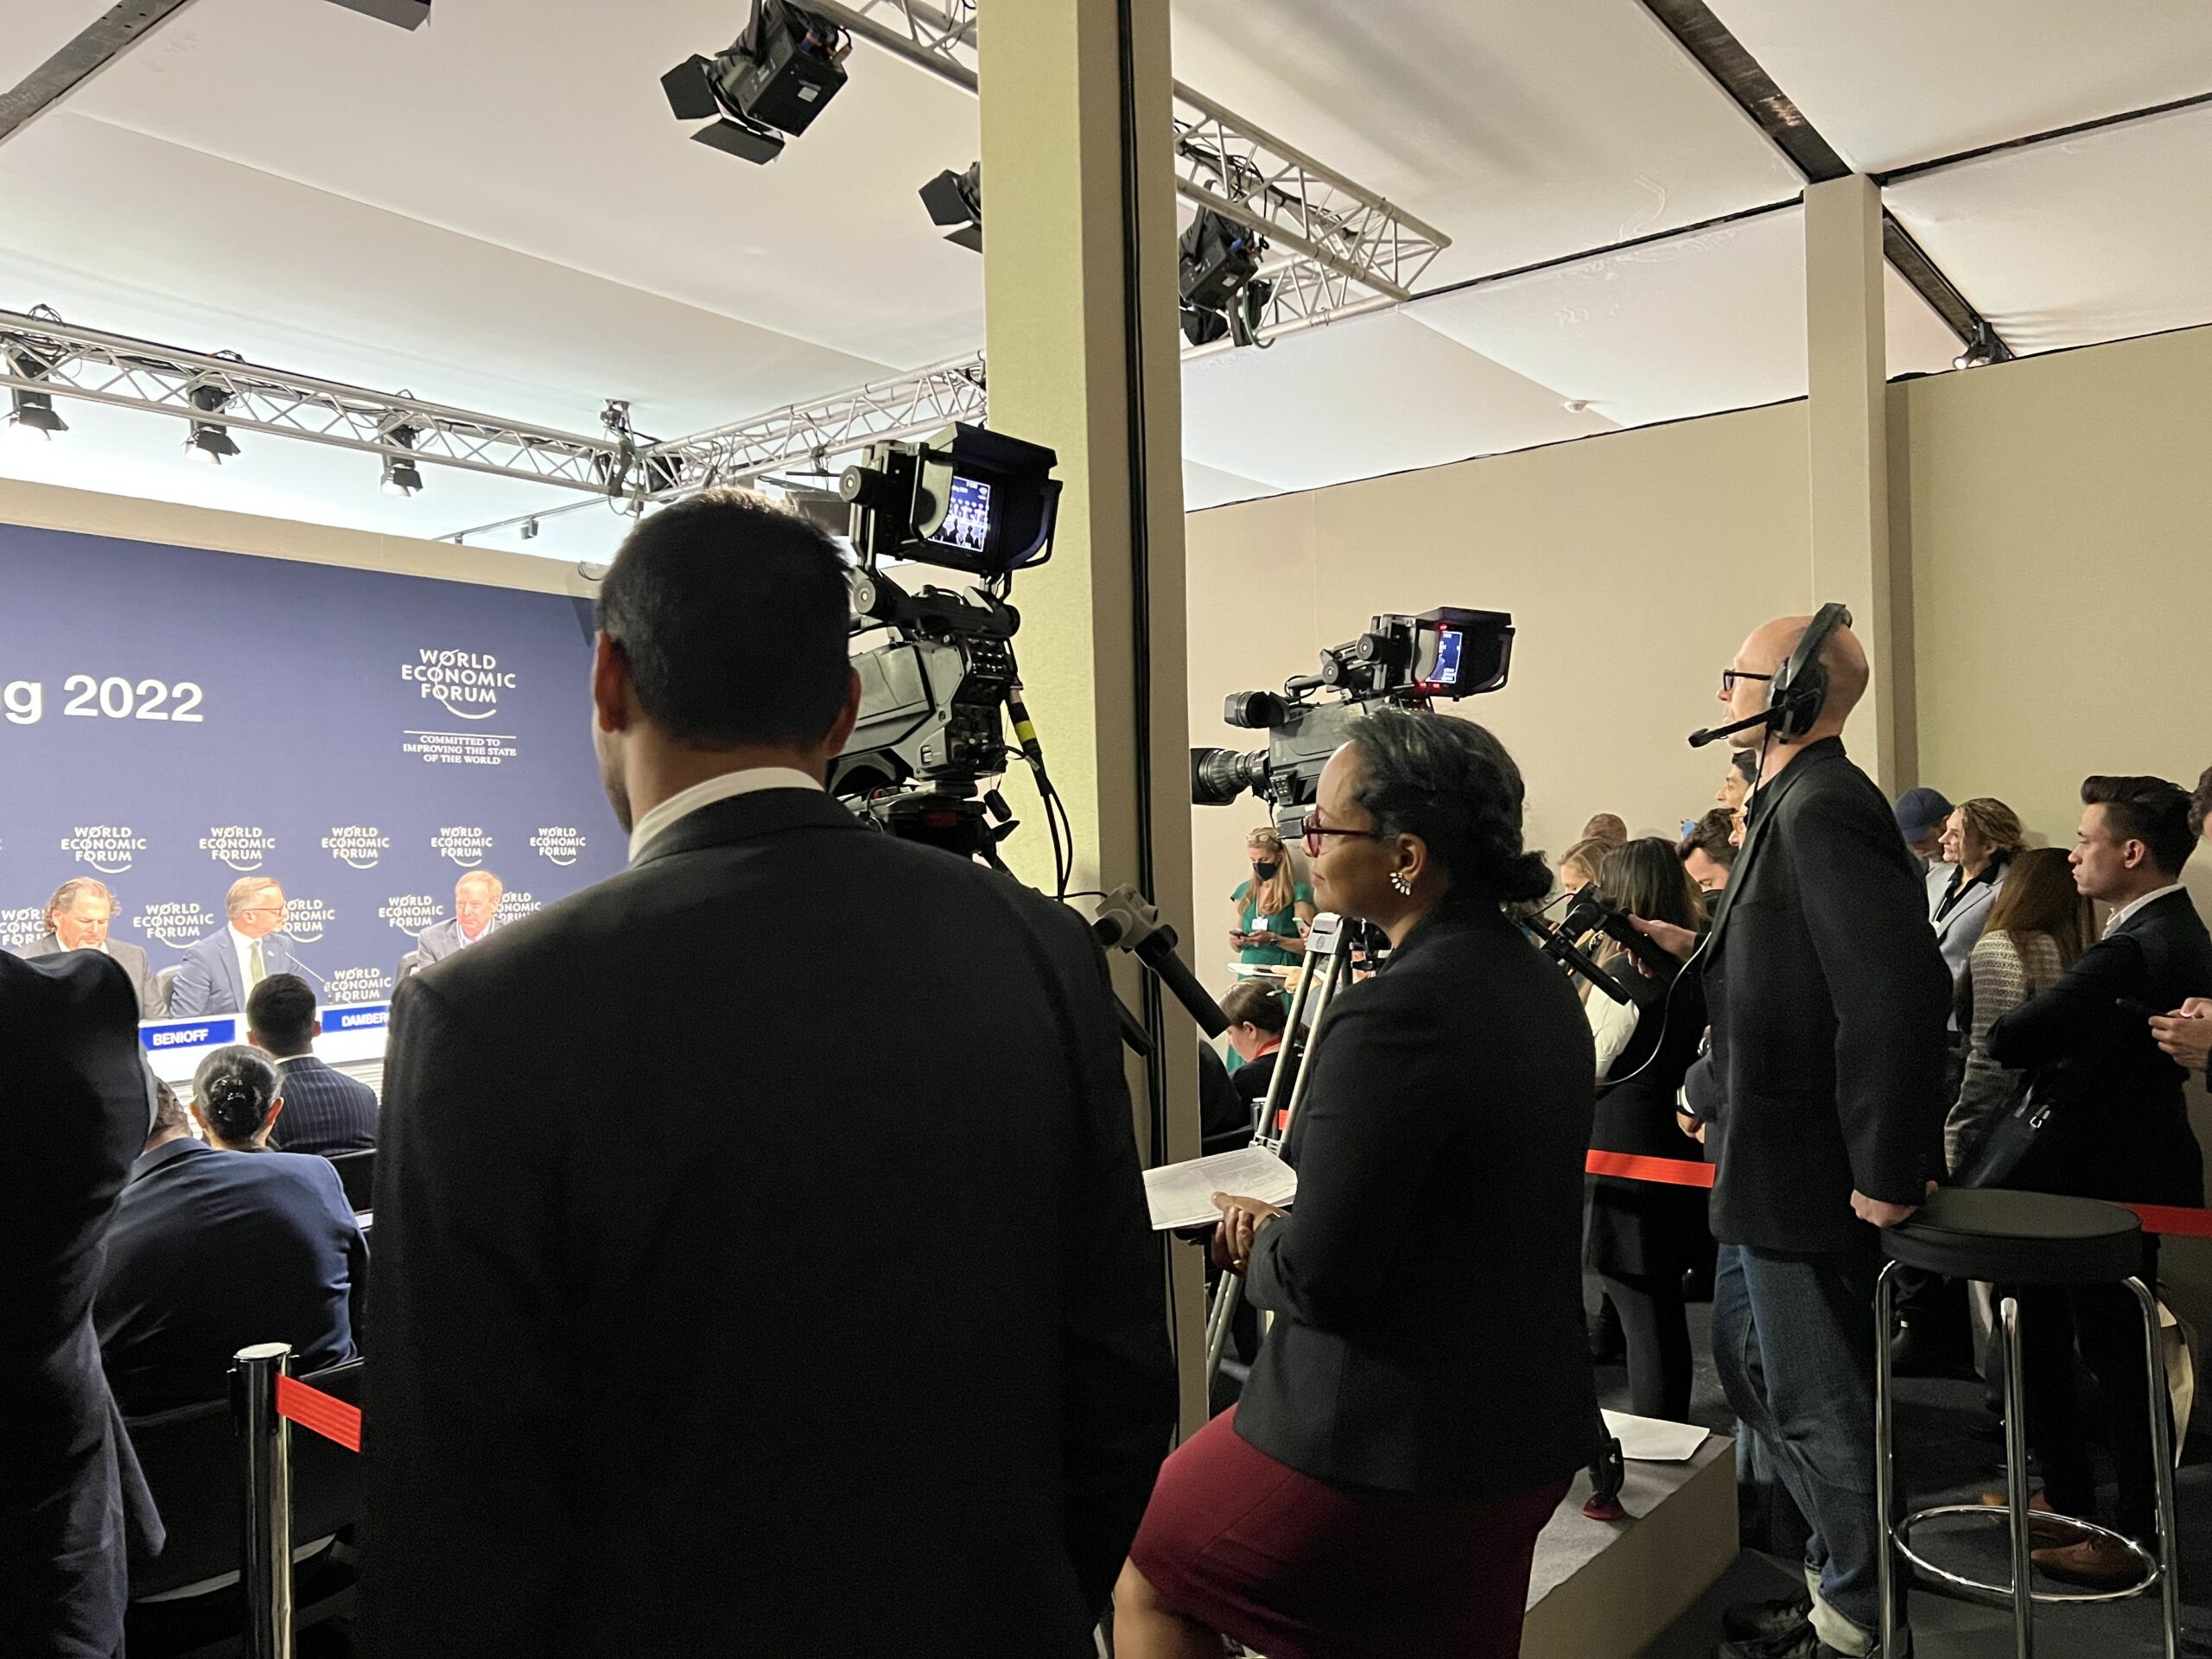 Behind the scenes at Davos